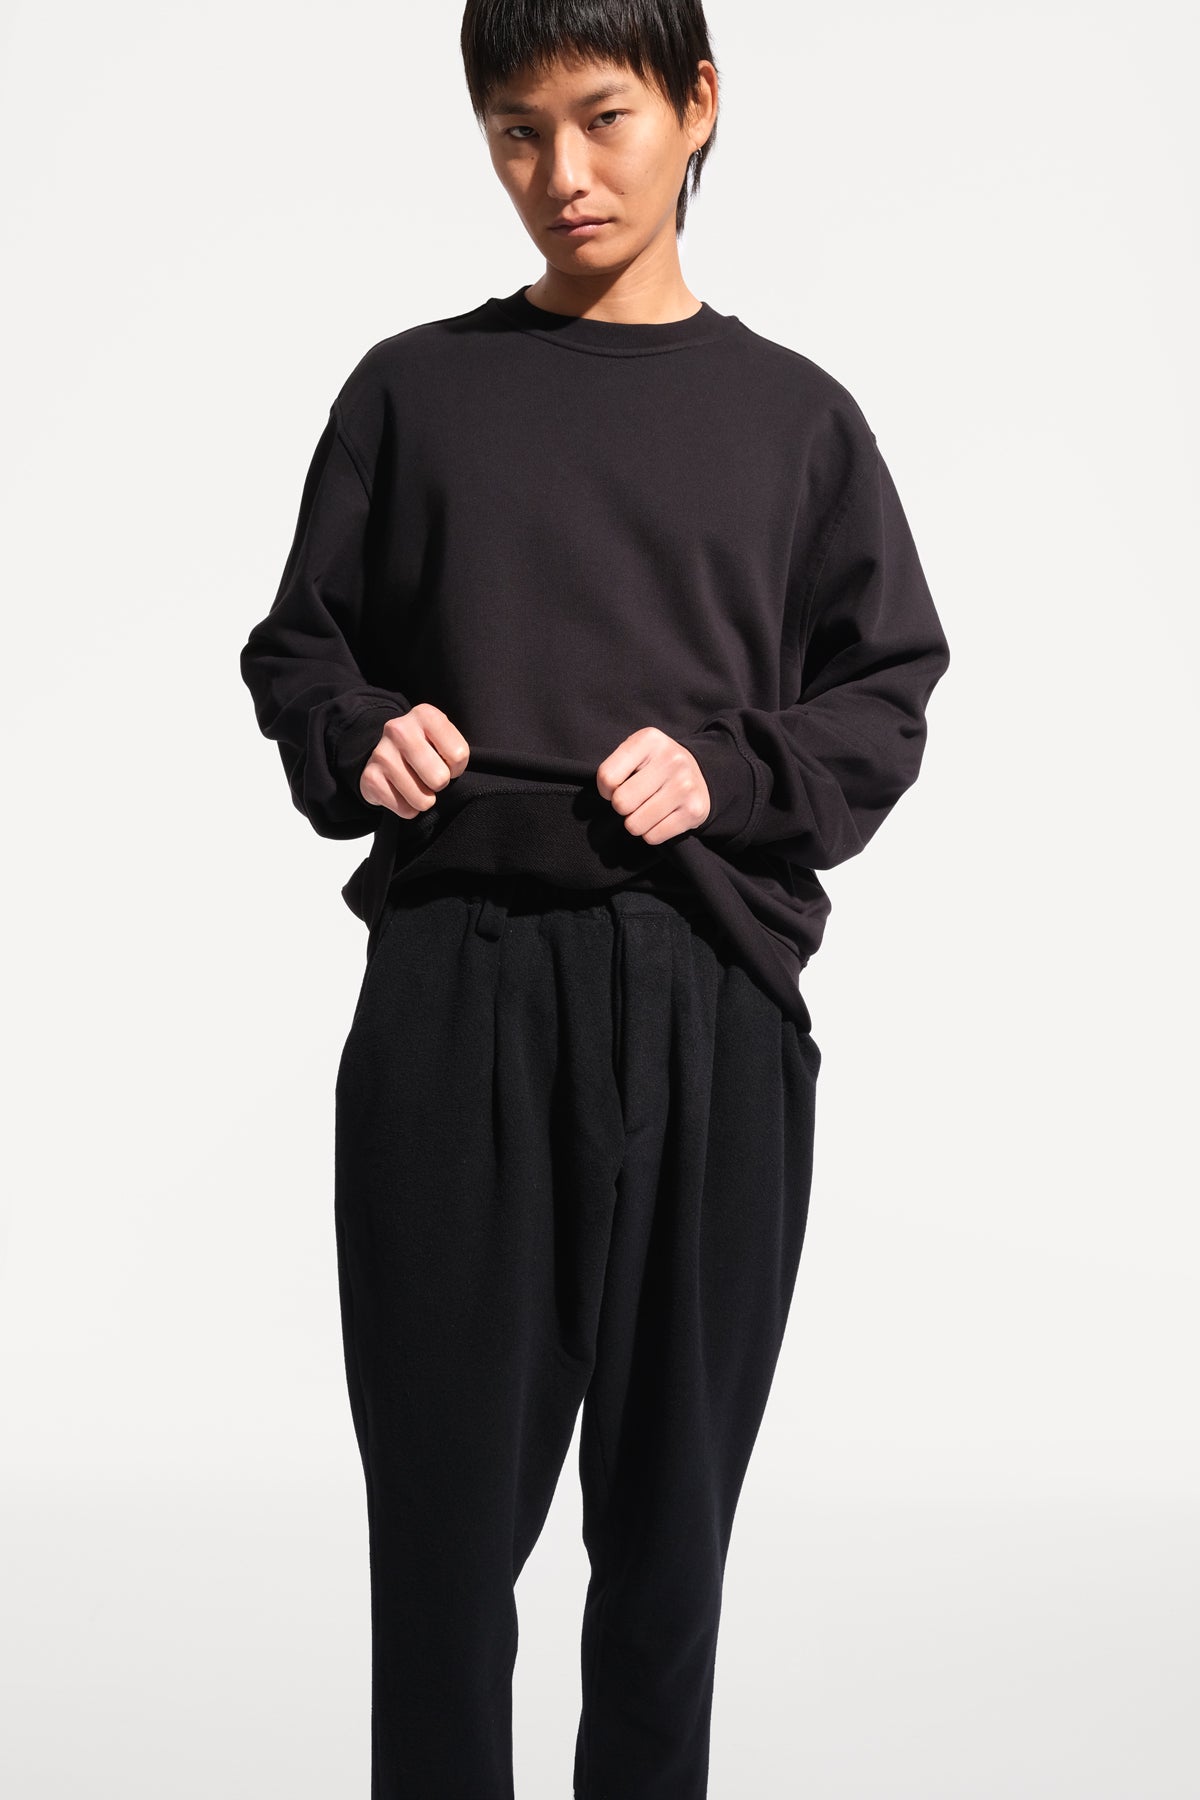 oftt - 02- reversible sweatshirt - black - organic cotton fleece - image 6